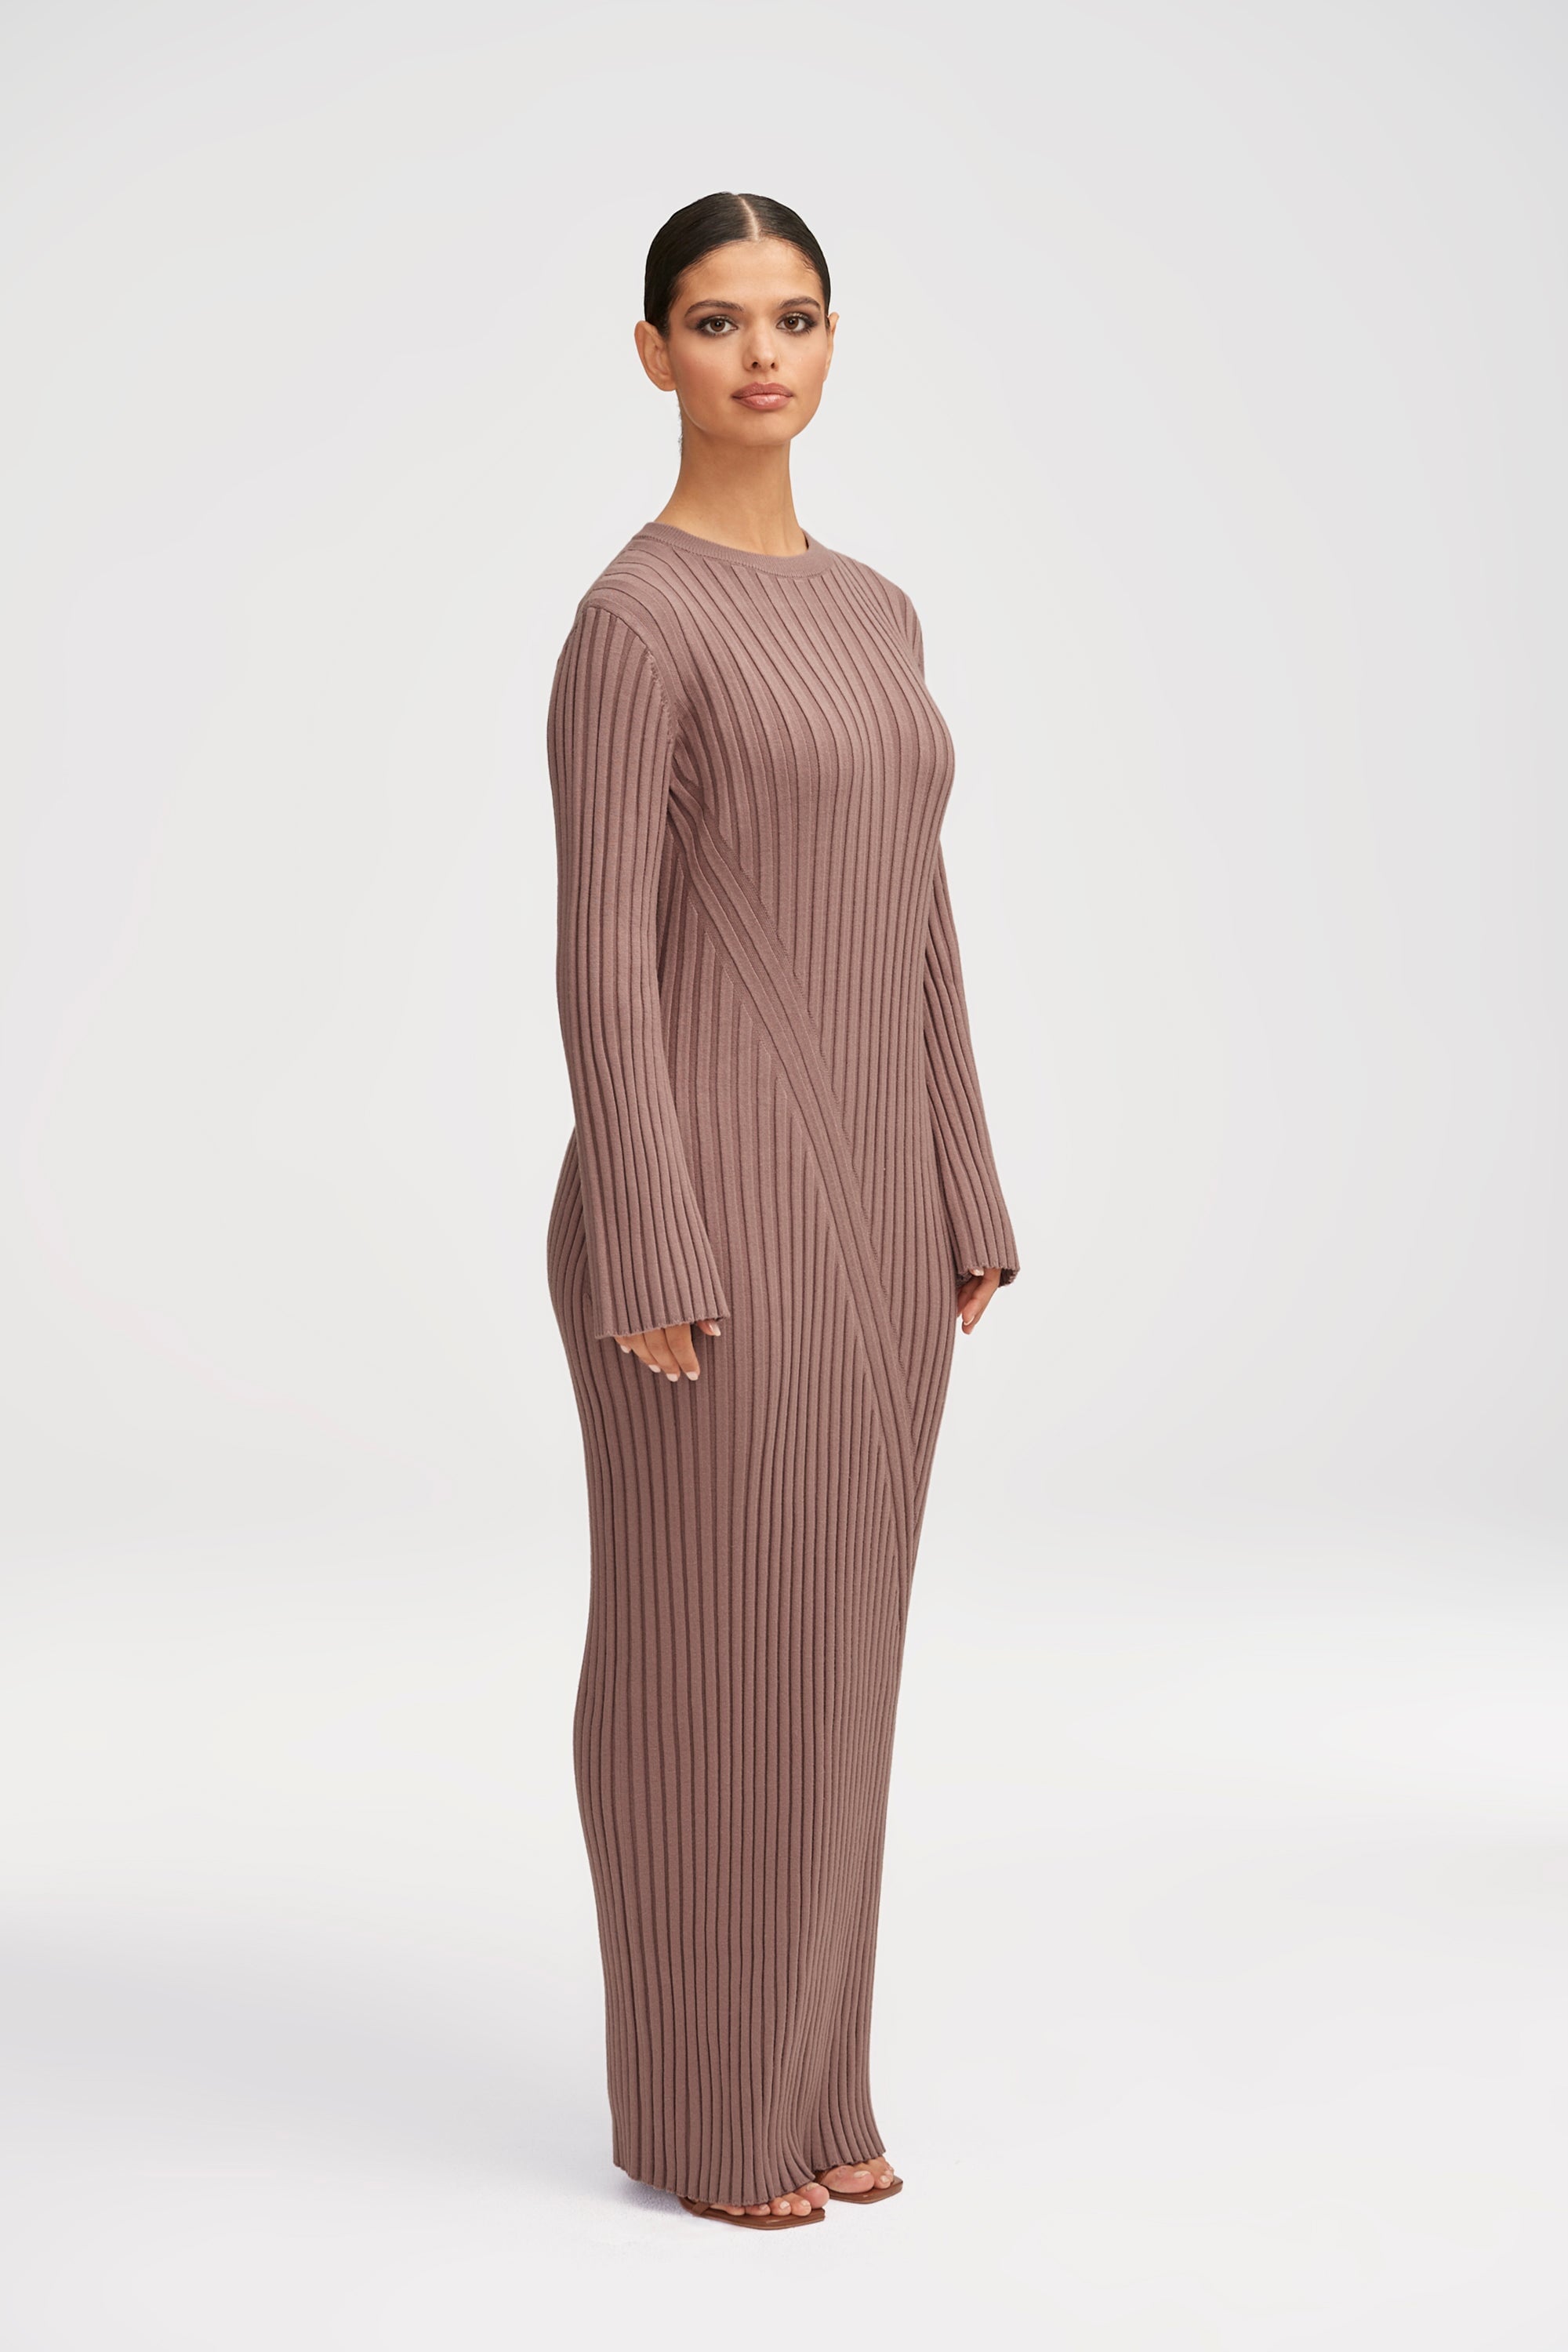 Melanie Ribbed Knit Maxi Dress - Taupe Clothing epschoolboard 